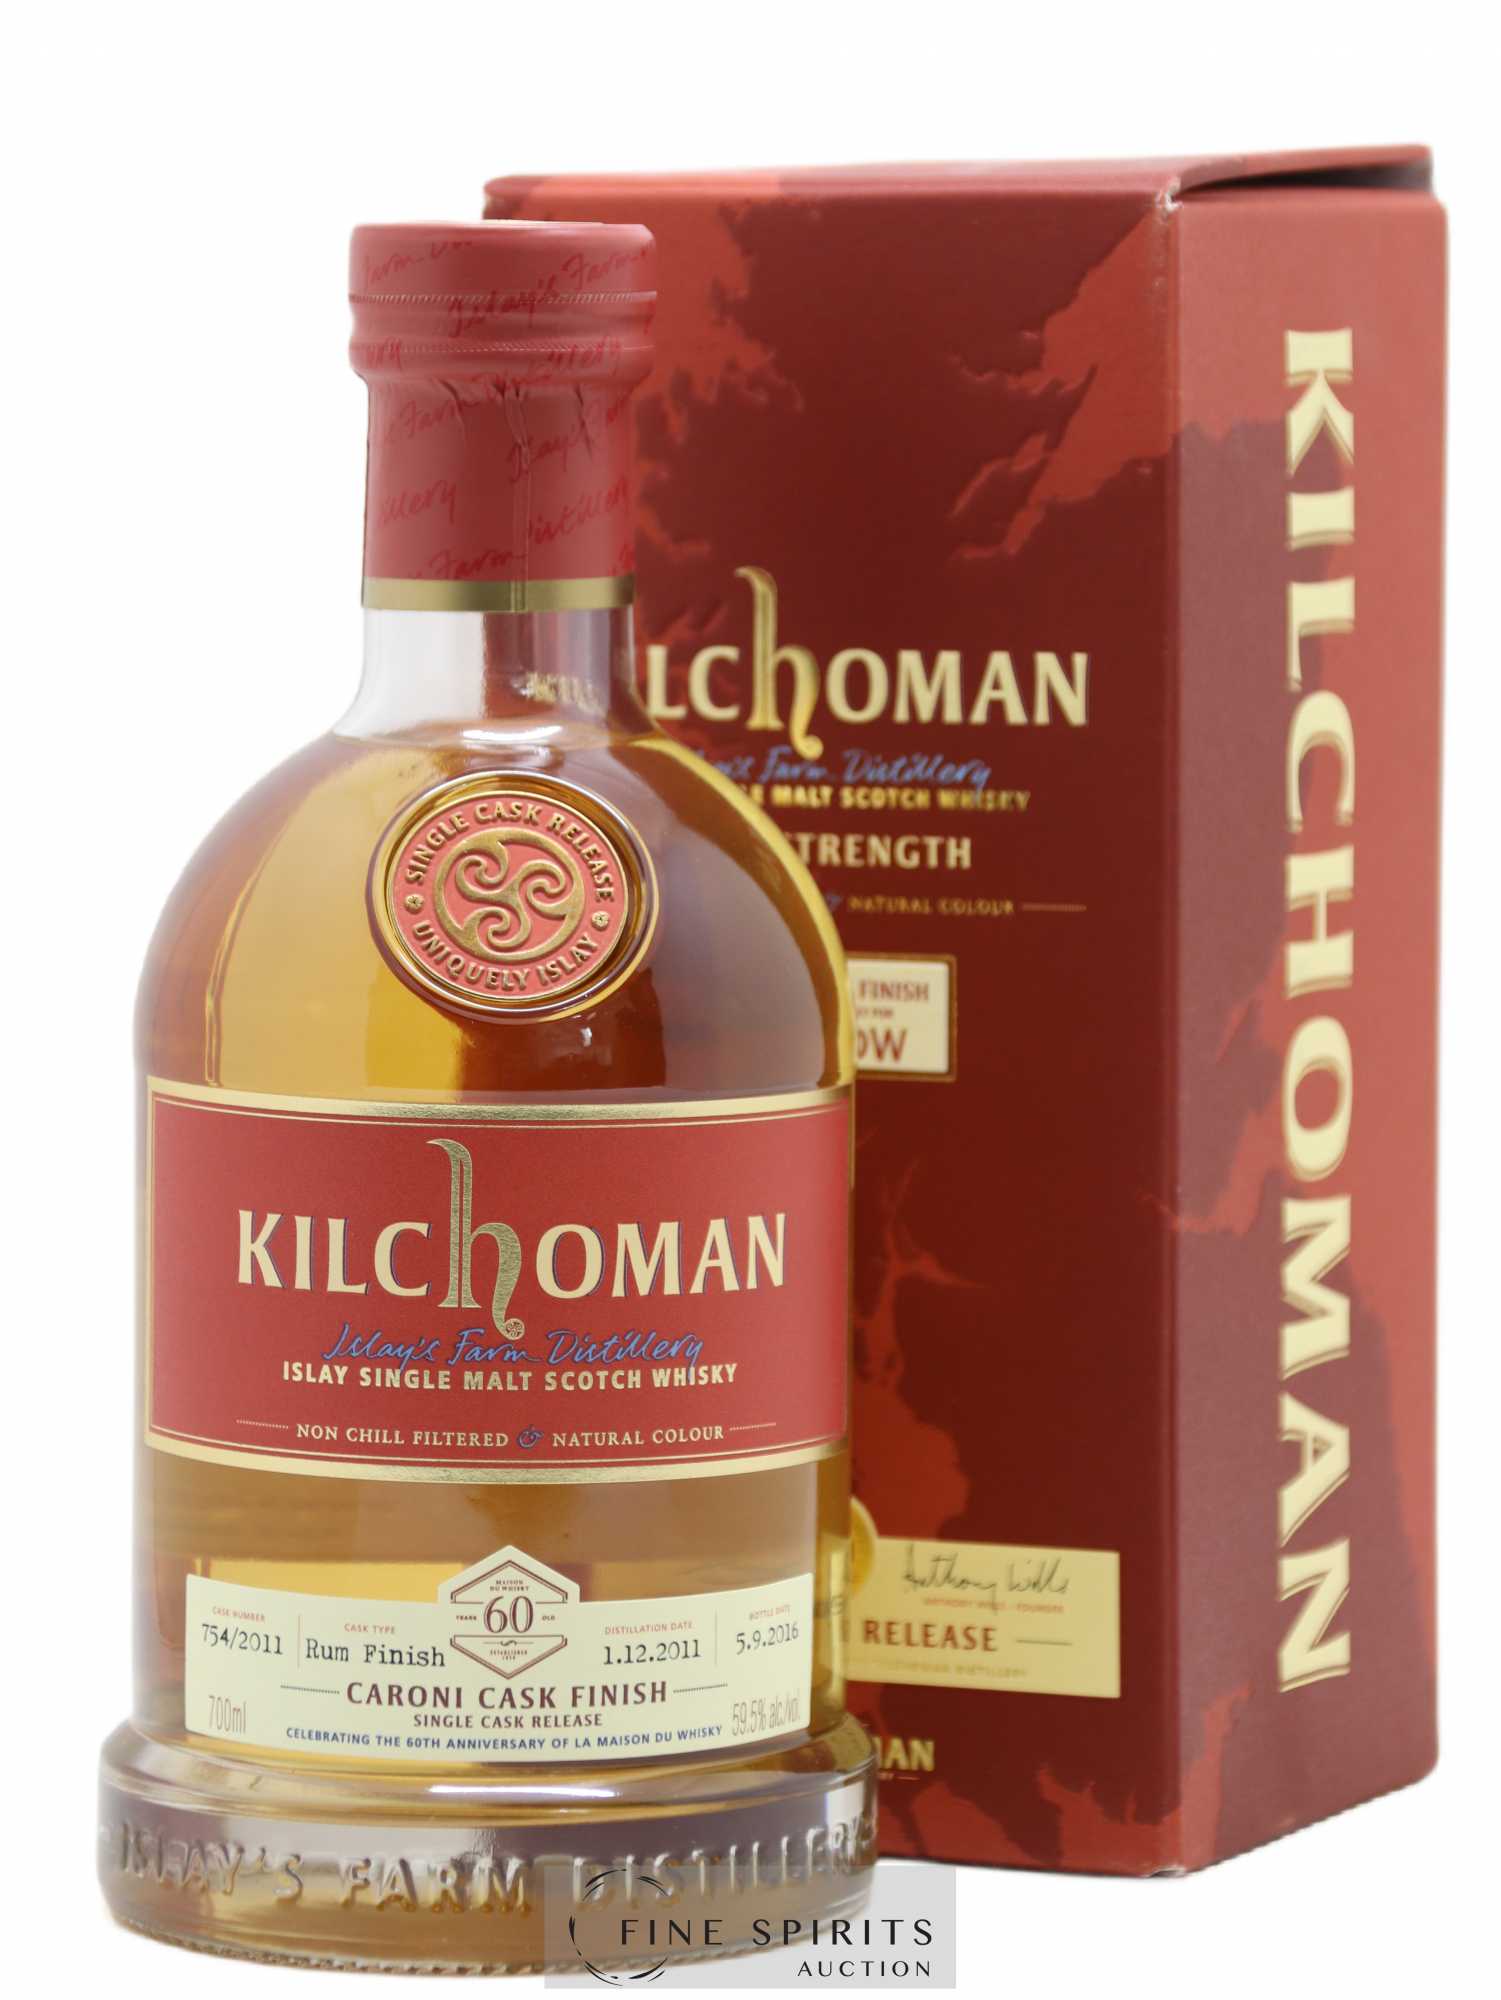 Kilchoman 2011 Of. Caroni Cask n°7542011 - One of 264 - bottled 2016 LMDW 60th Anniversary 